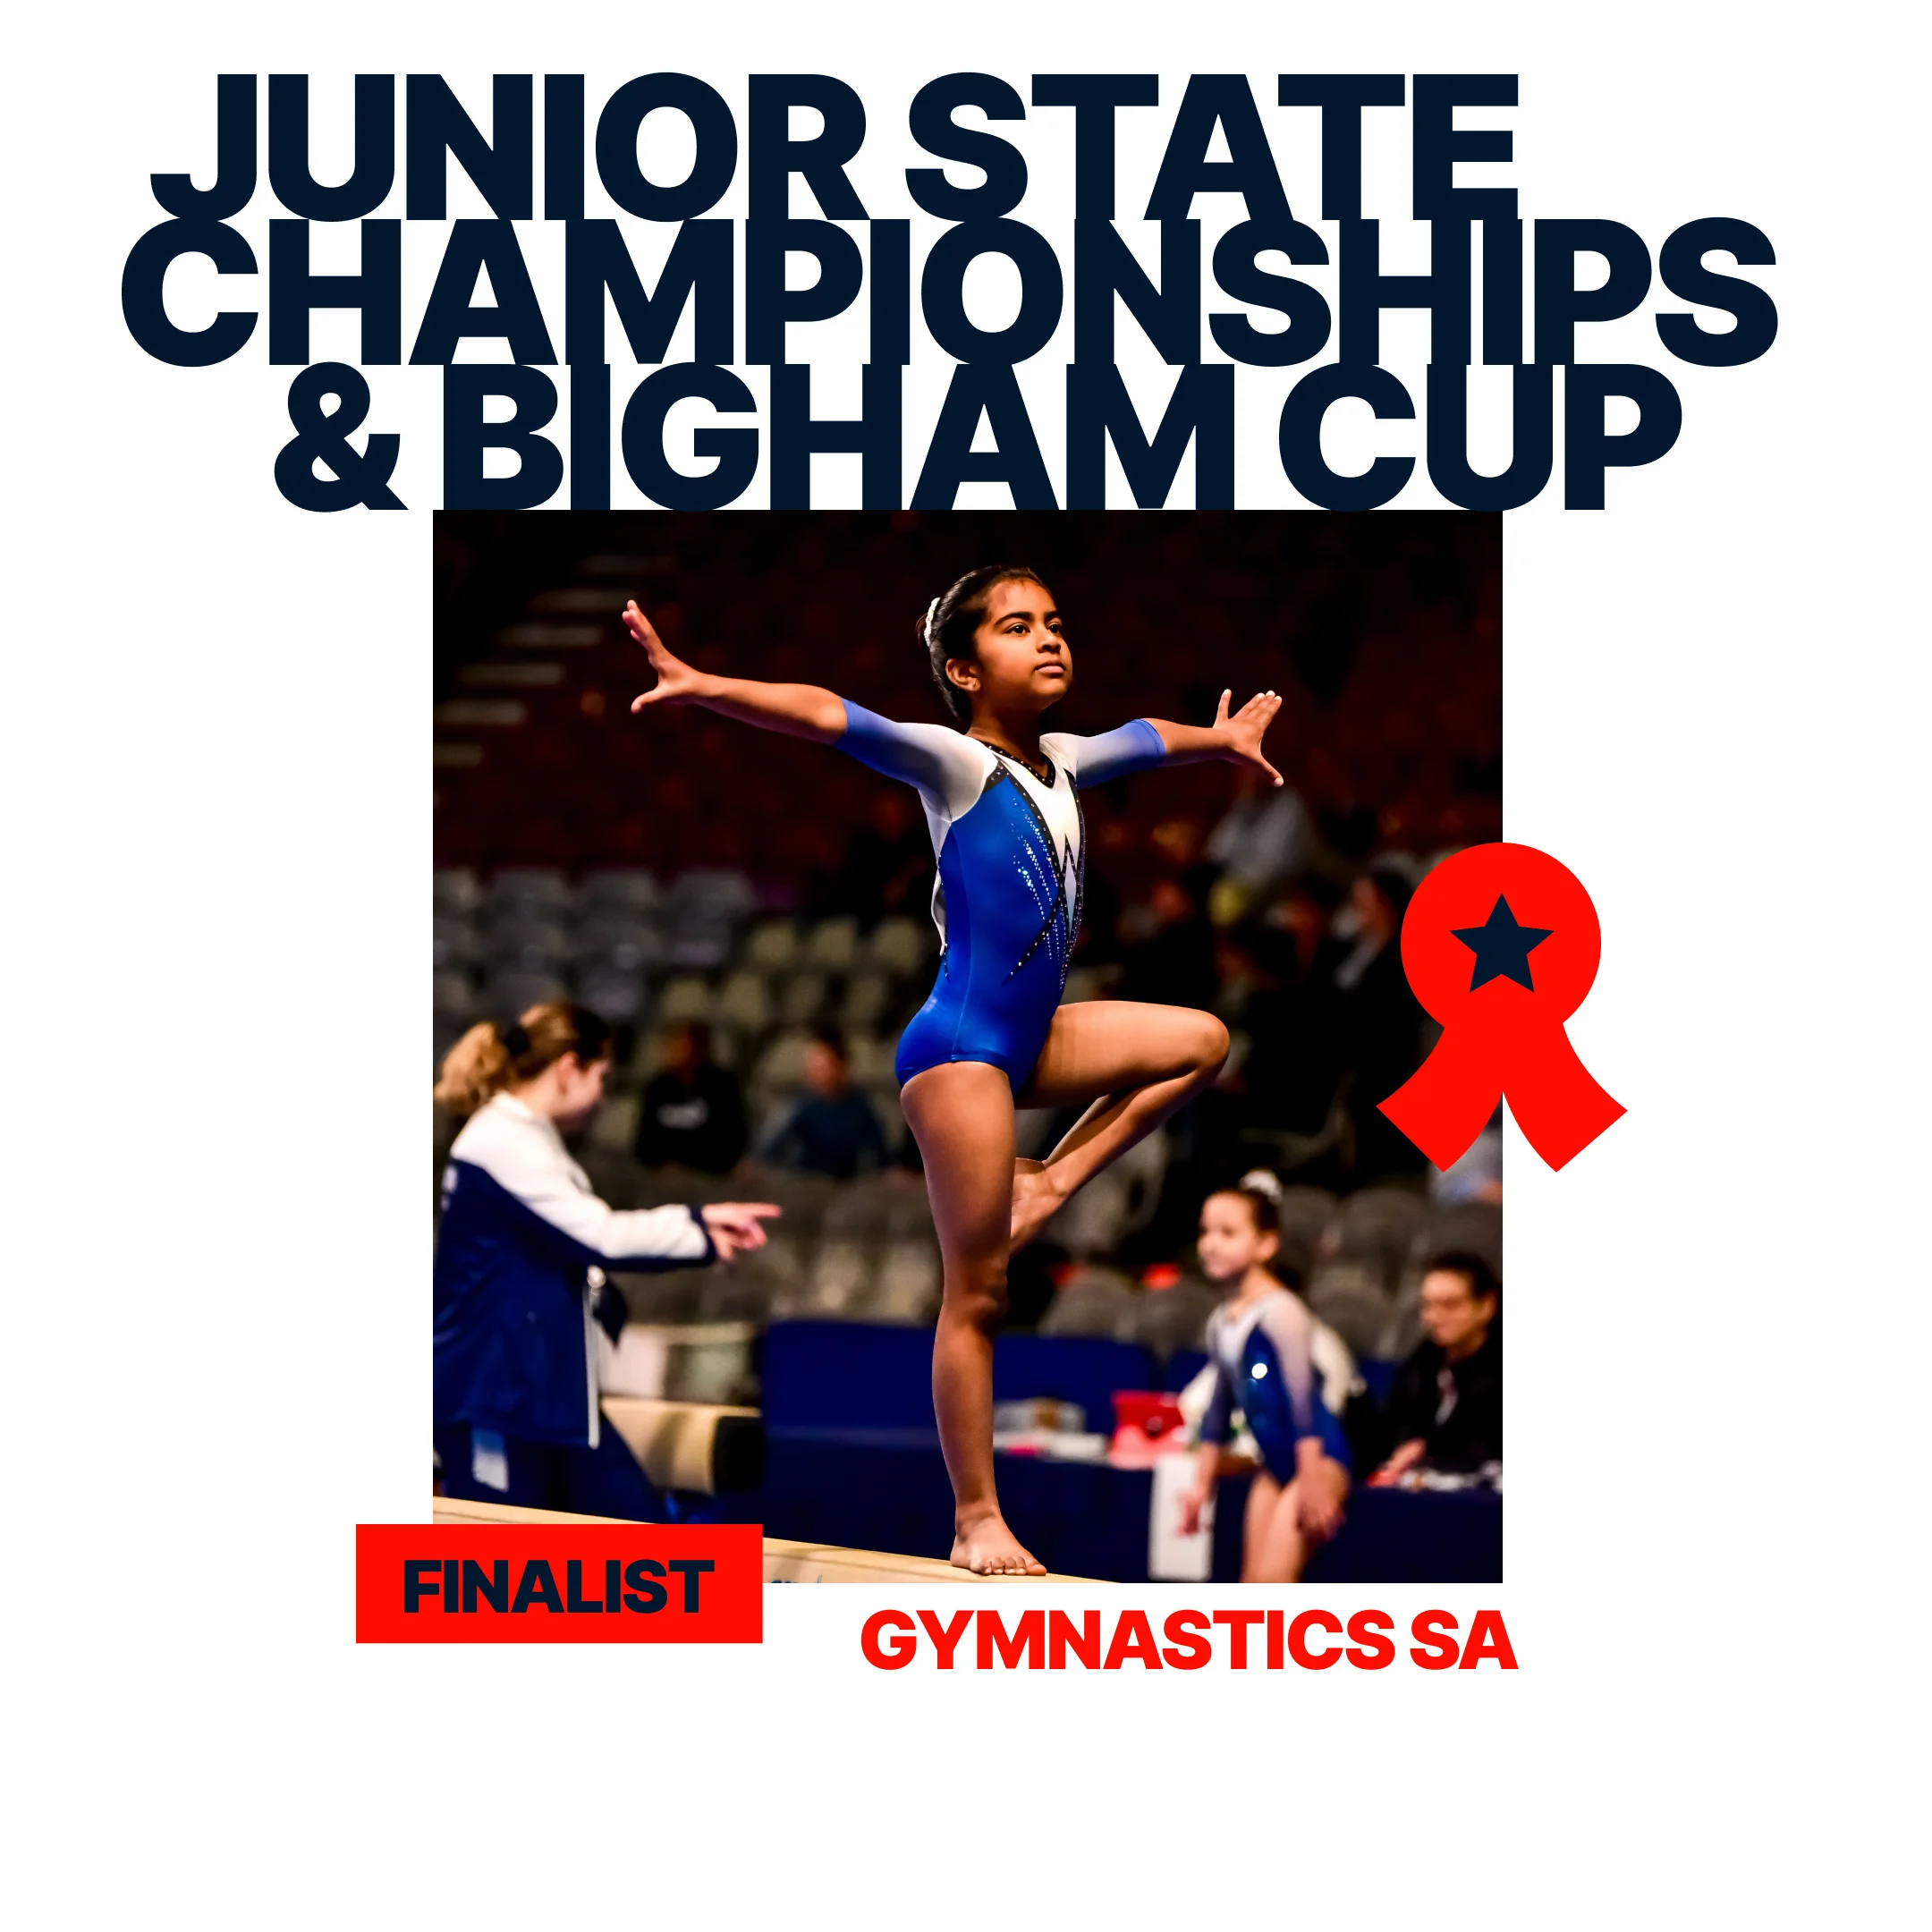 Junior State Championships & Bigham Cup, Gymnastics SA